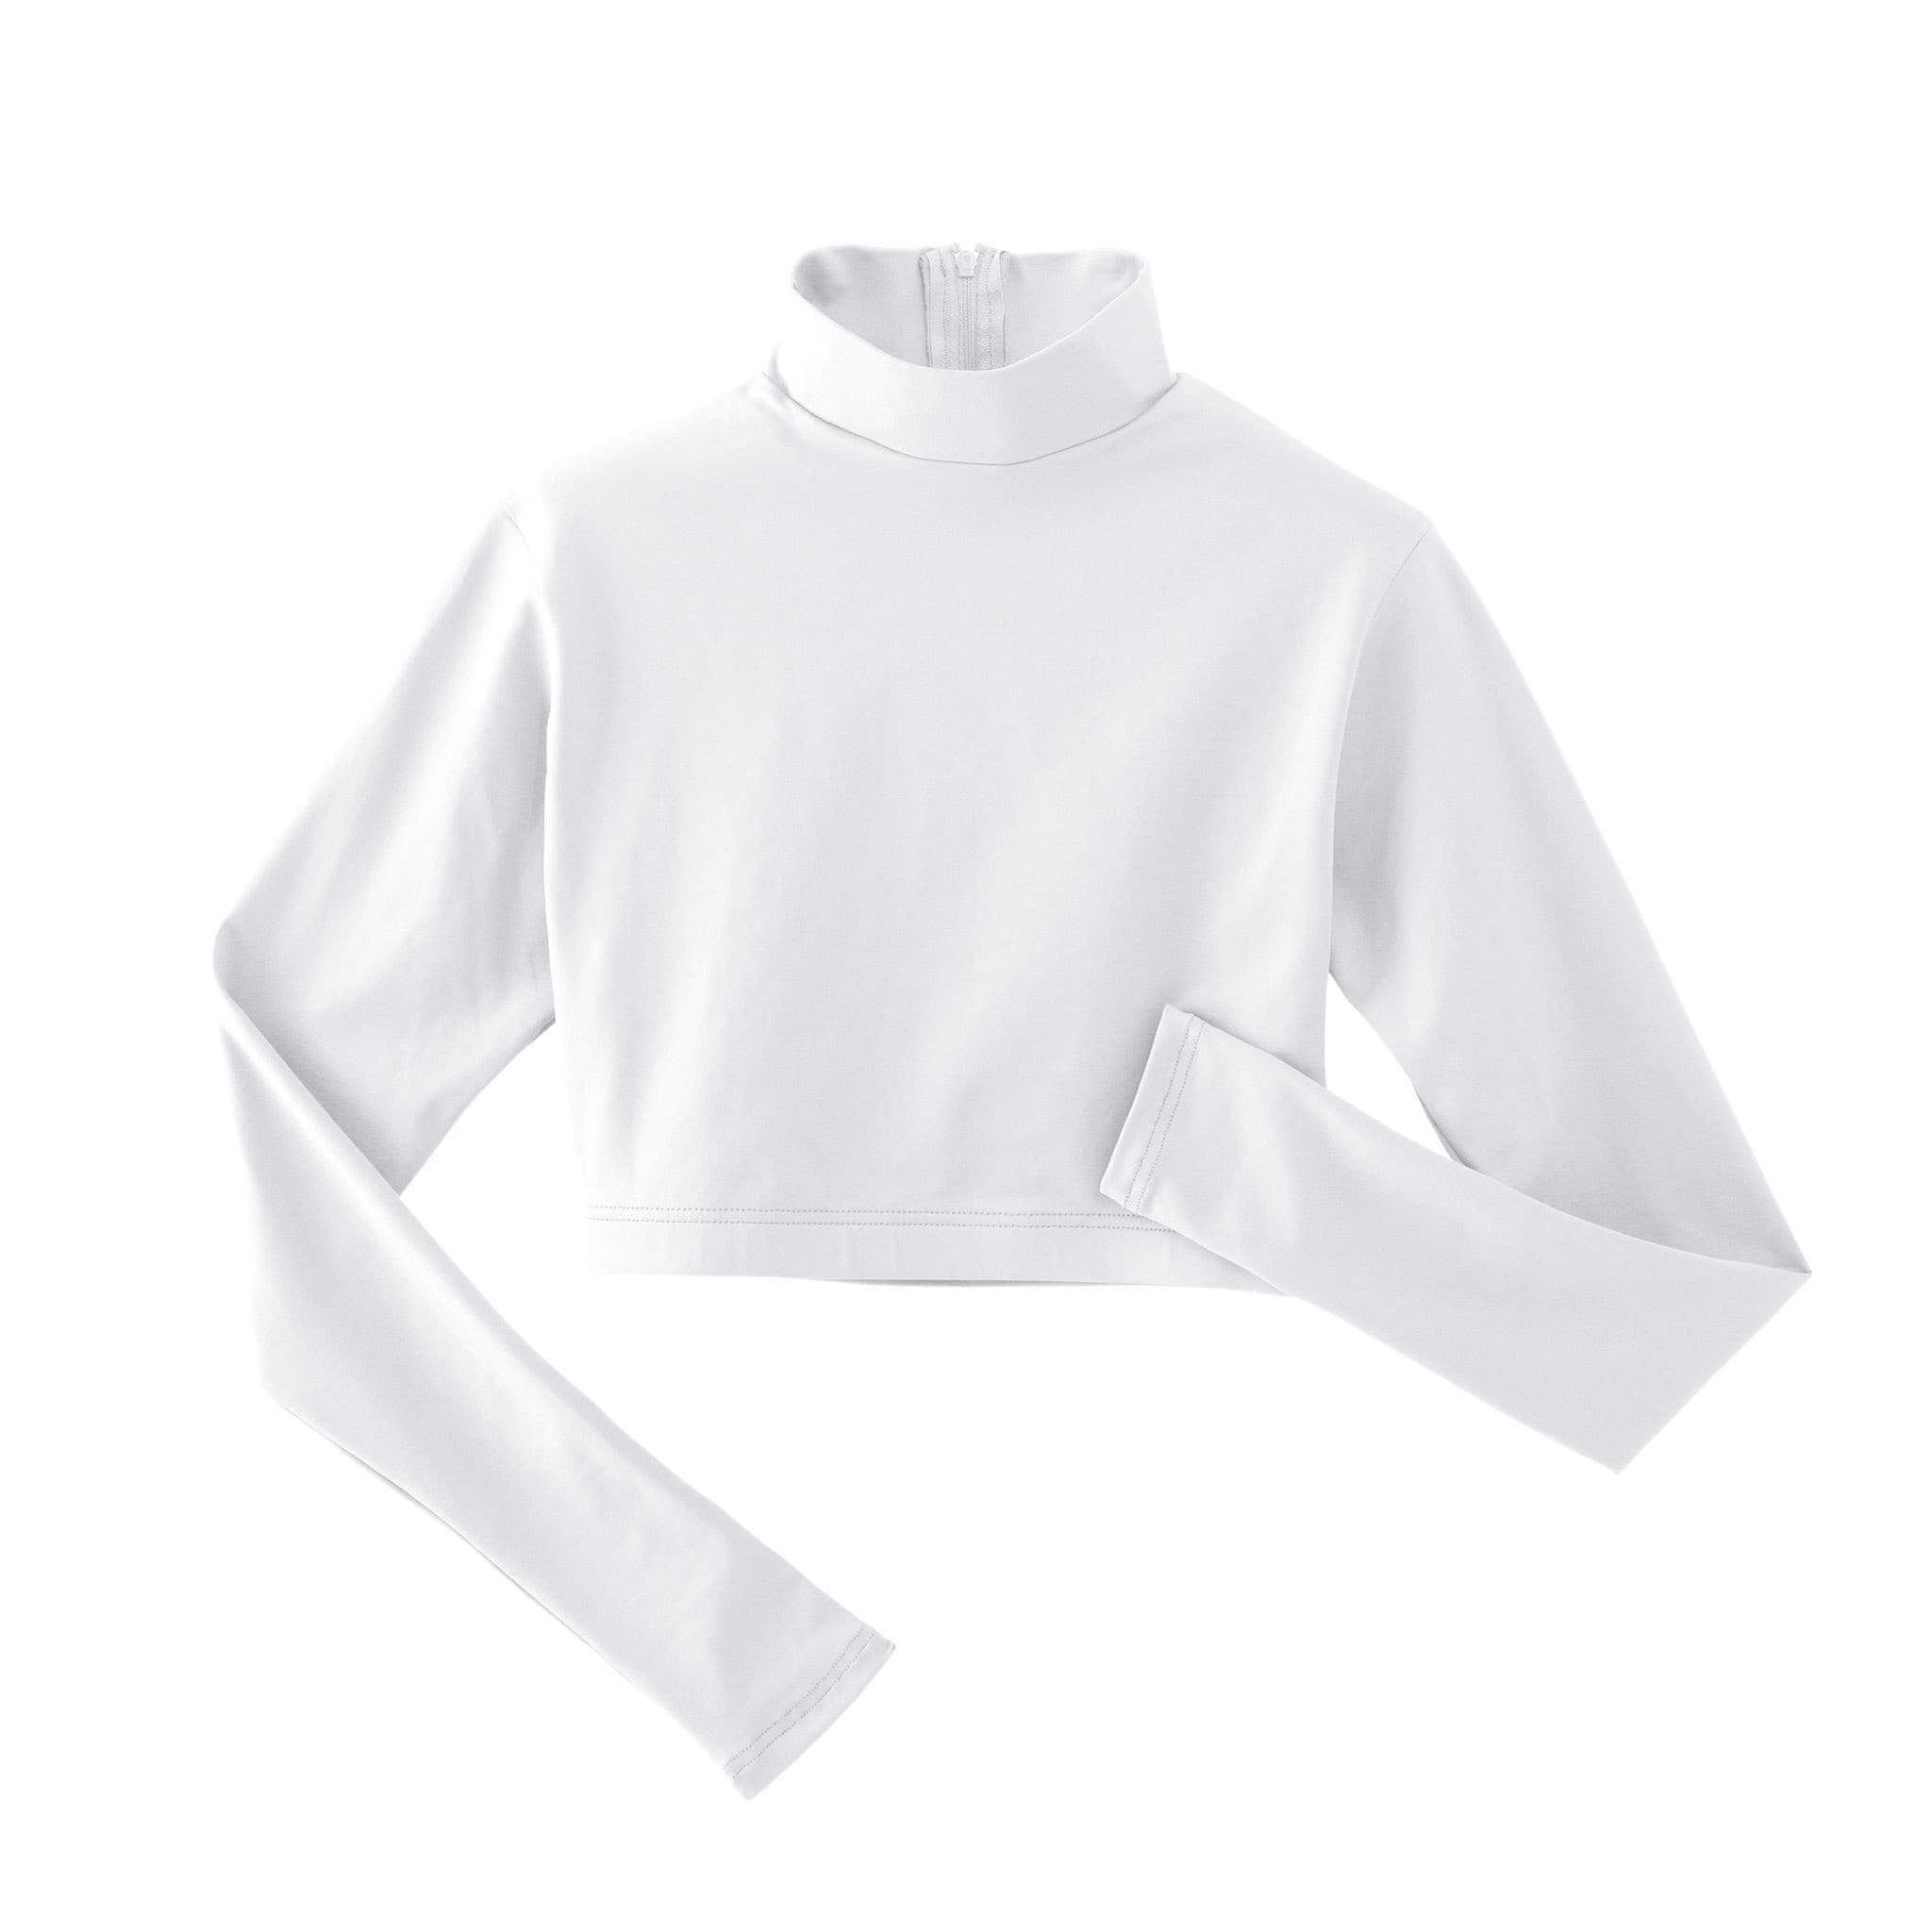 Backtee First Skin Turtle Neck Mock Underwear in white buy online - Golf  House